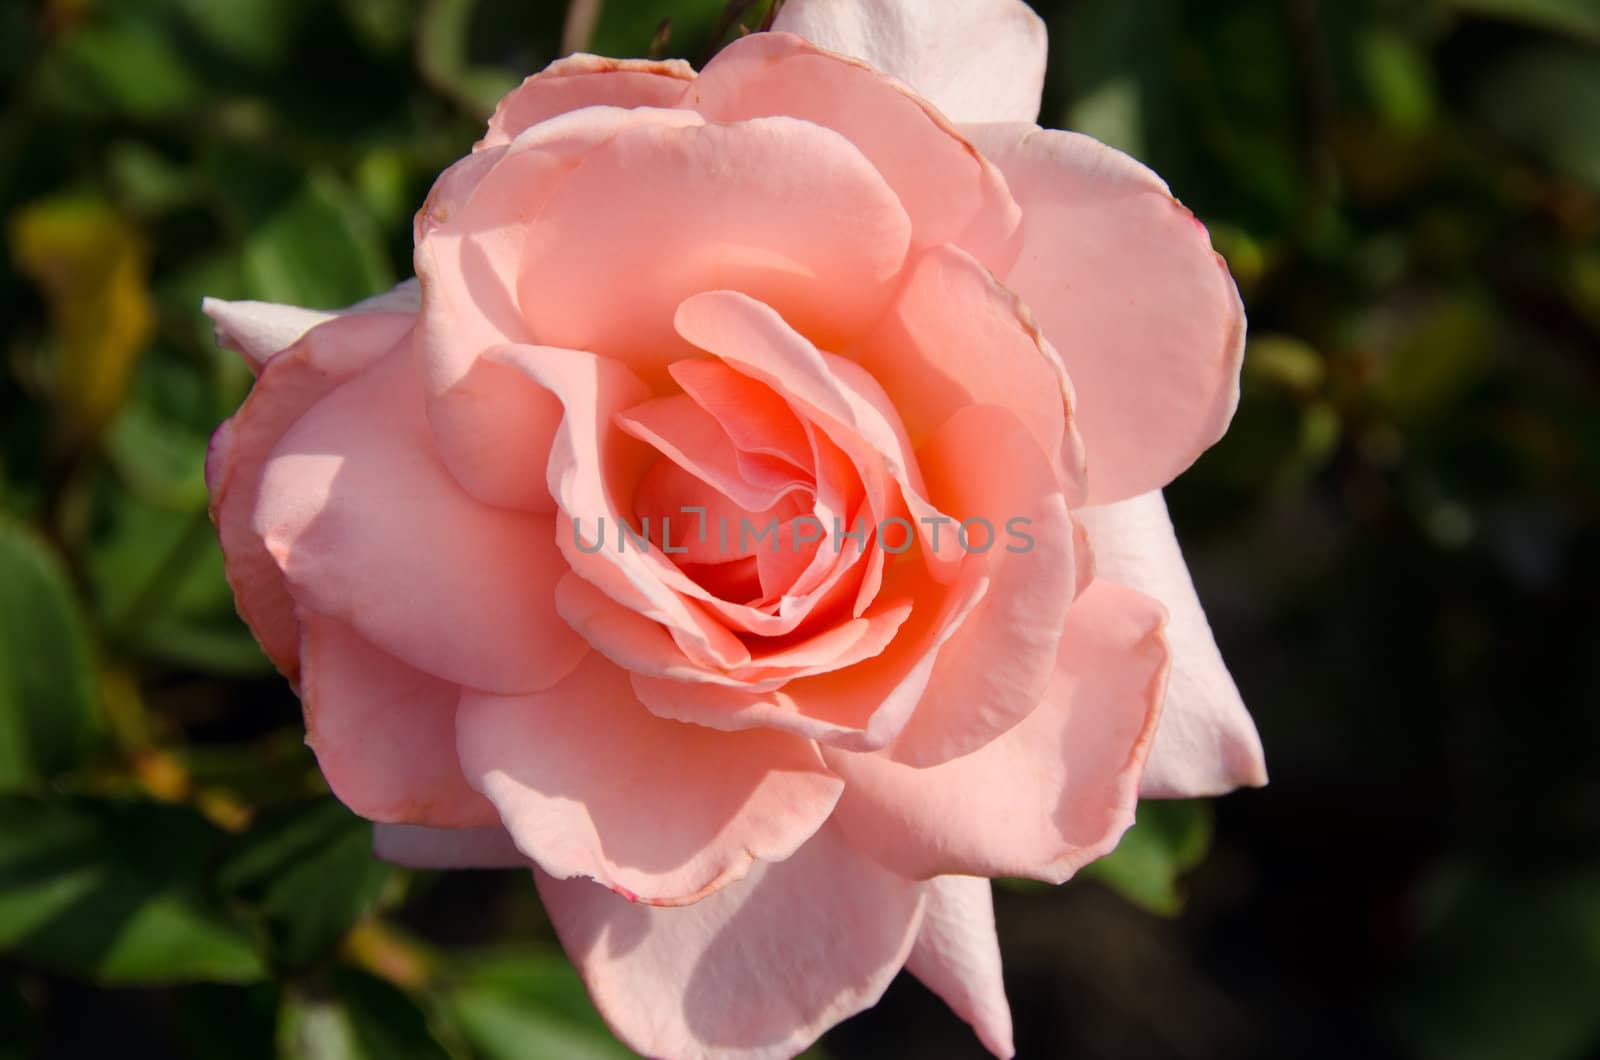 Pink rose flower by Arrxxx